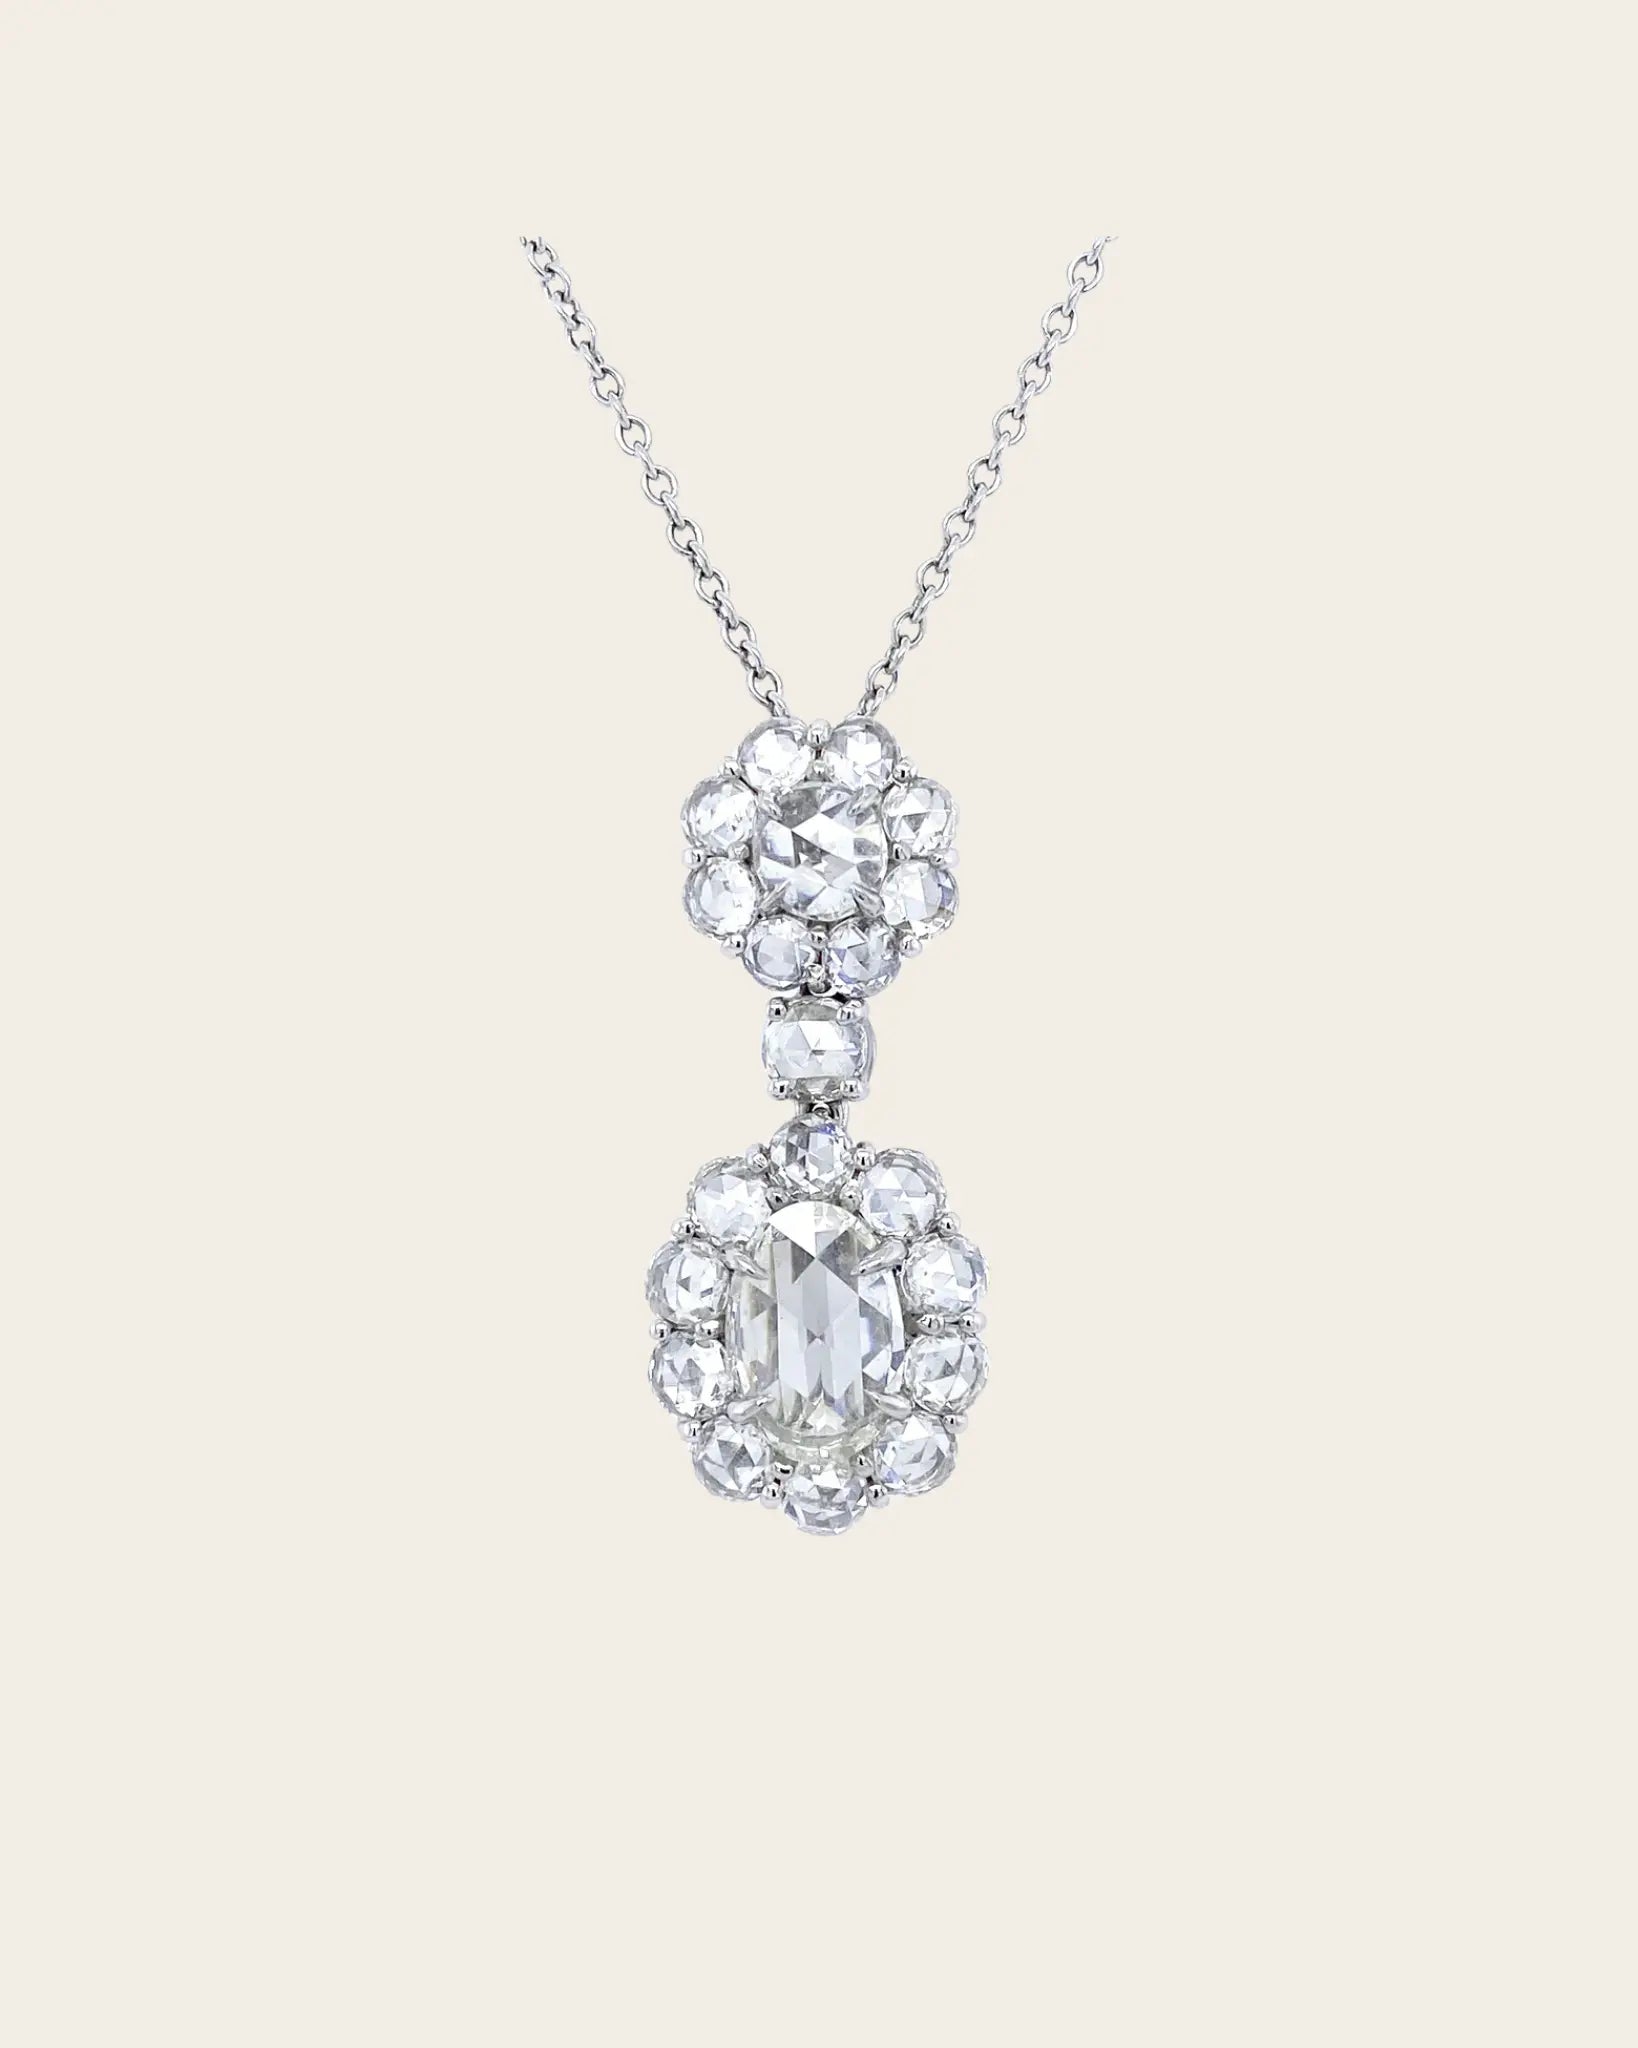 A Bayco rose cut diamond necklace with 21 diamonds.